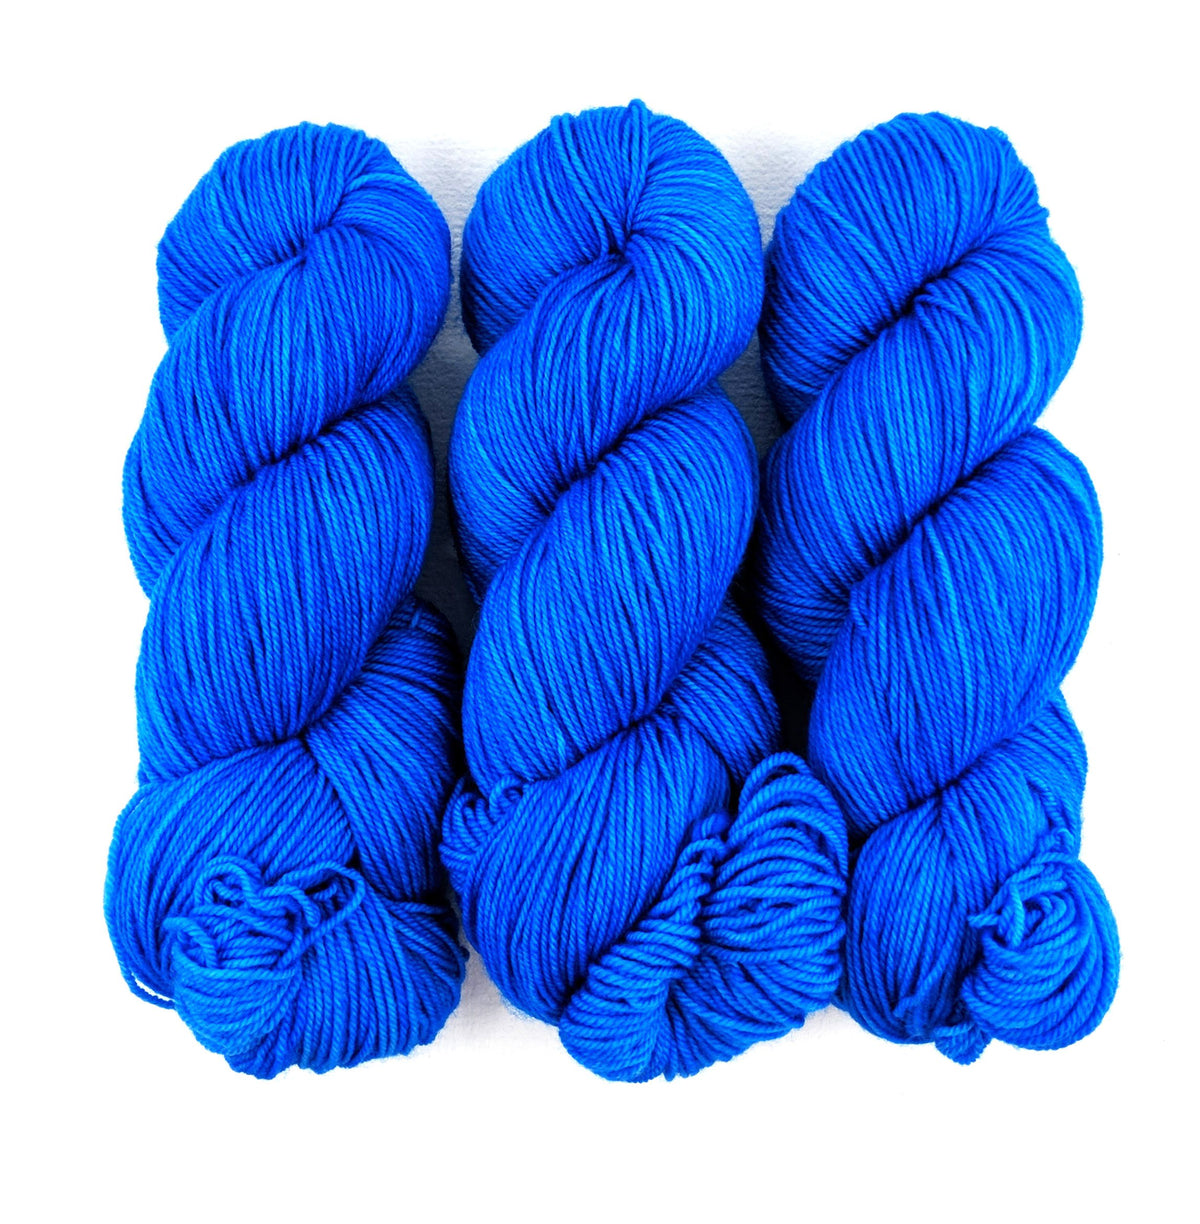 Cerulean - Nettle Soft DK - Dyed Stock